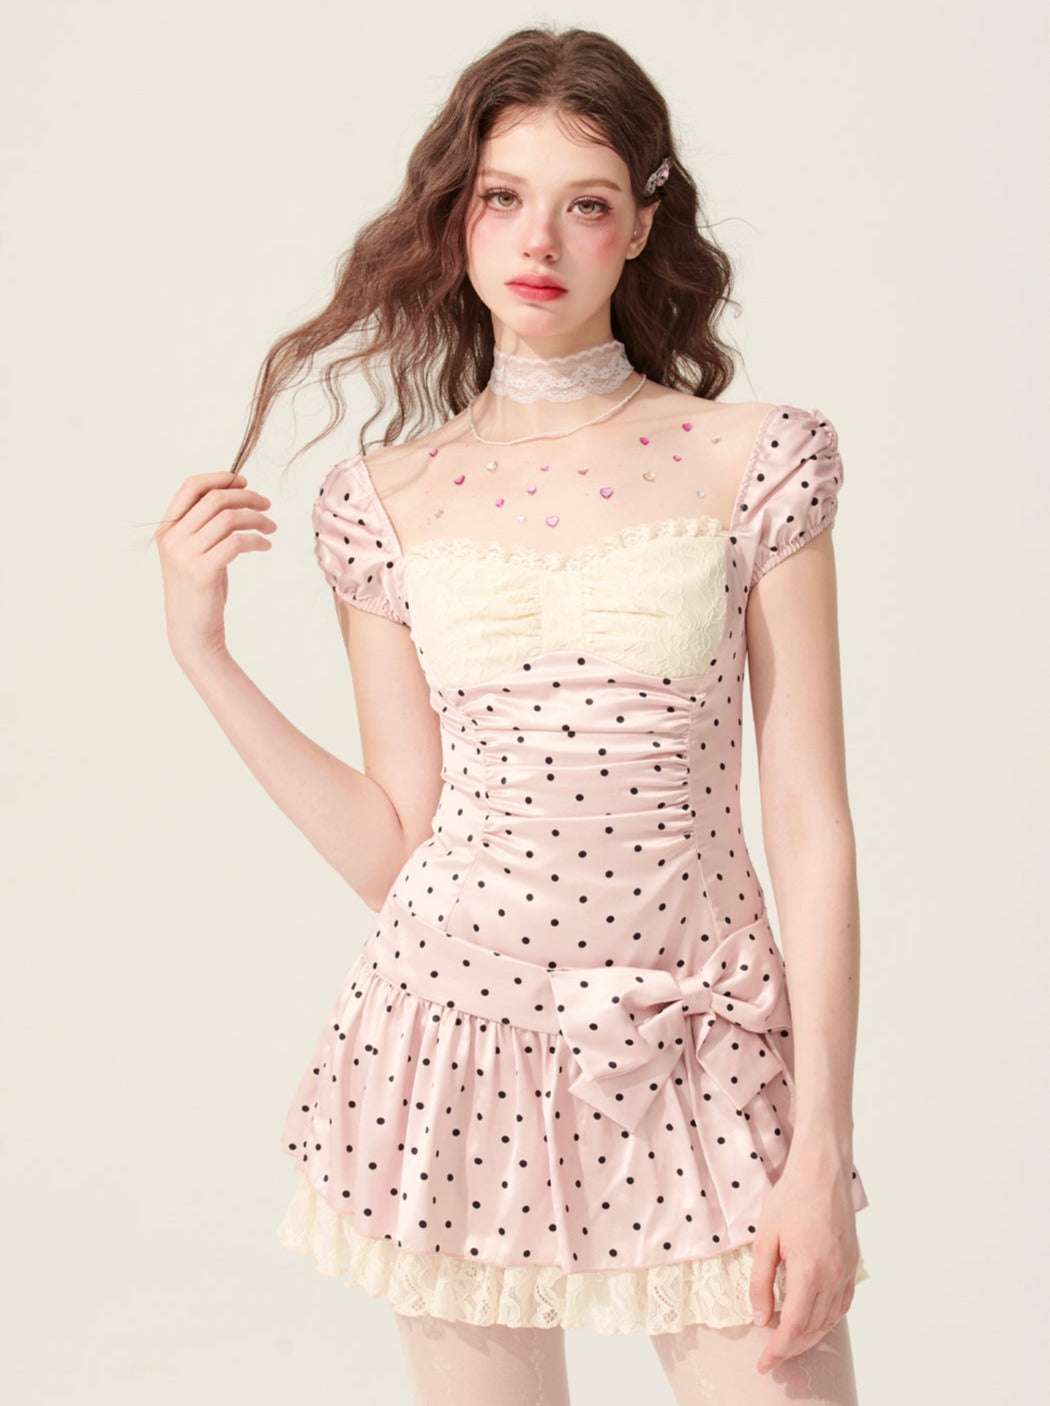 [En vente le 31 mai à 20 heures] less eye pink mist pinch white pink slip dress women's summer short skirt polka dots